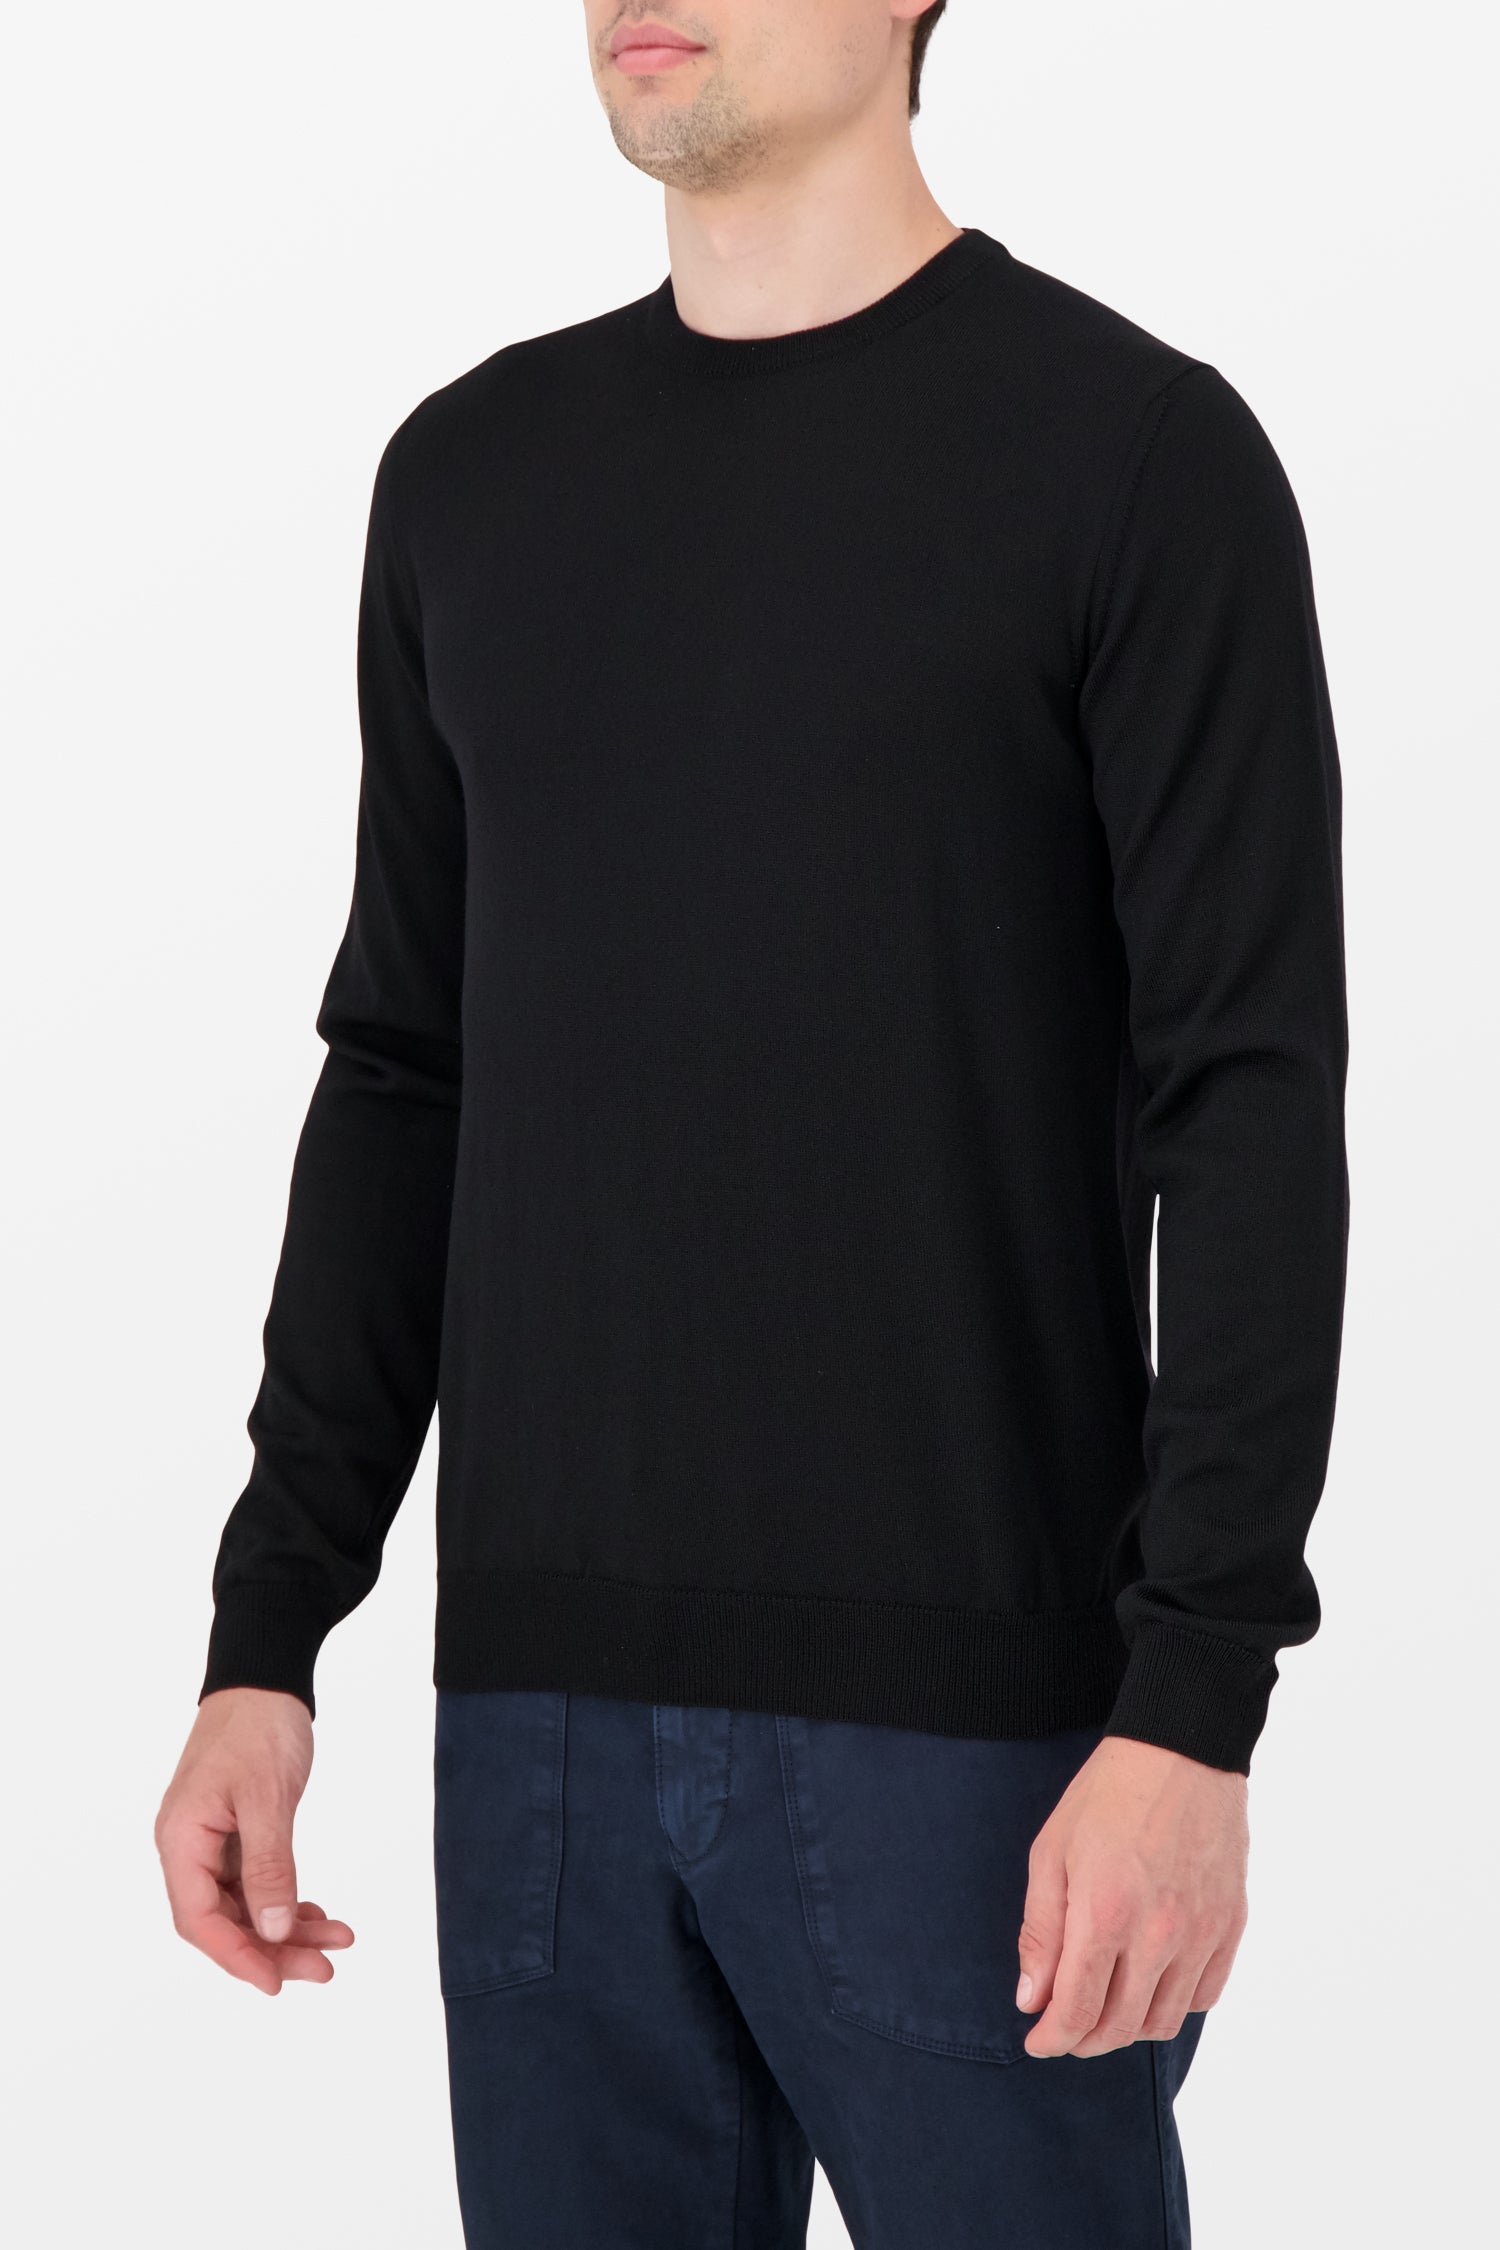 Zanone Black Sweater